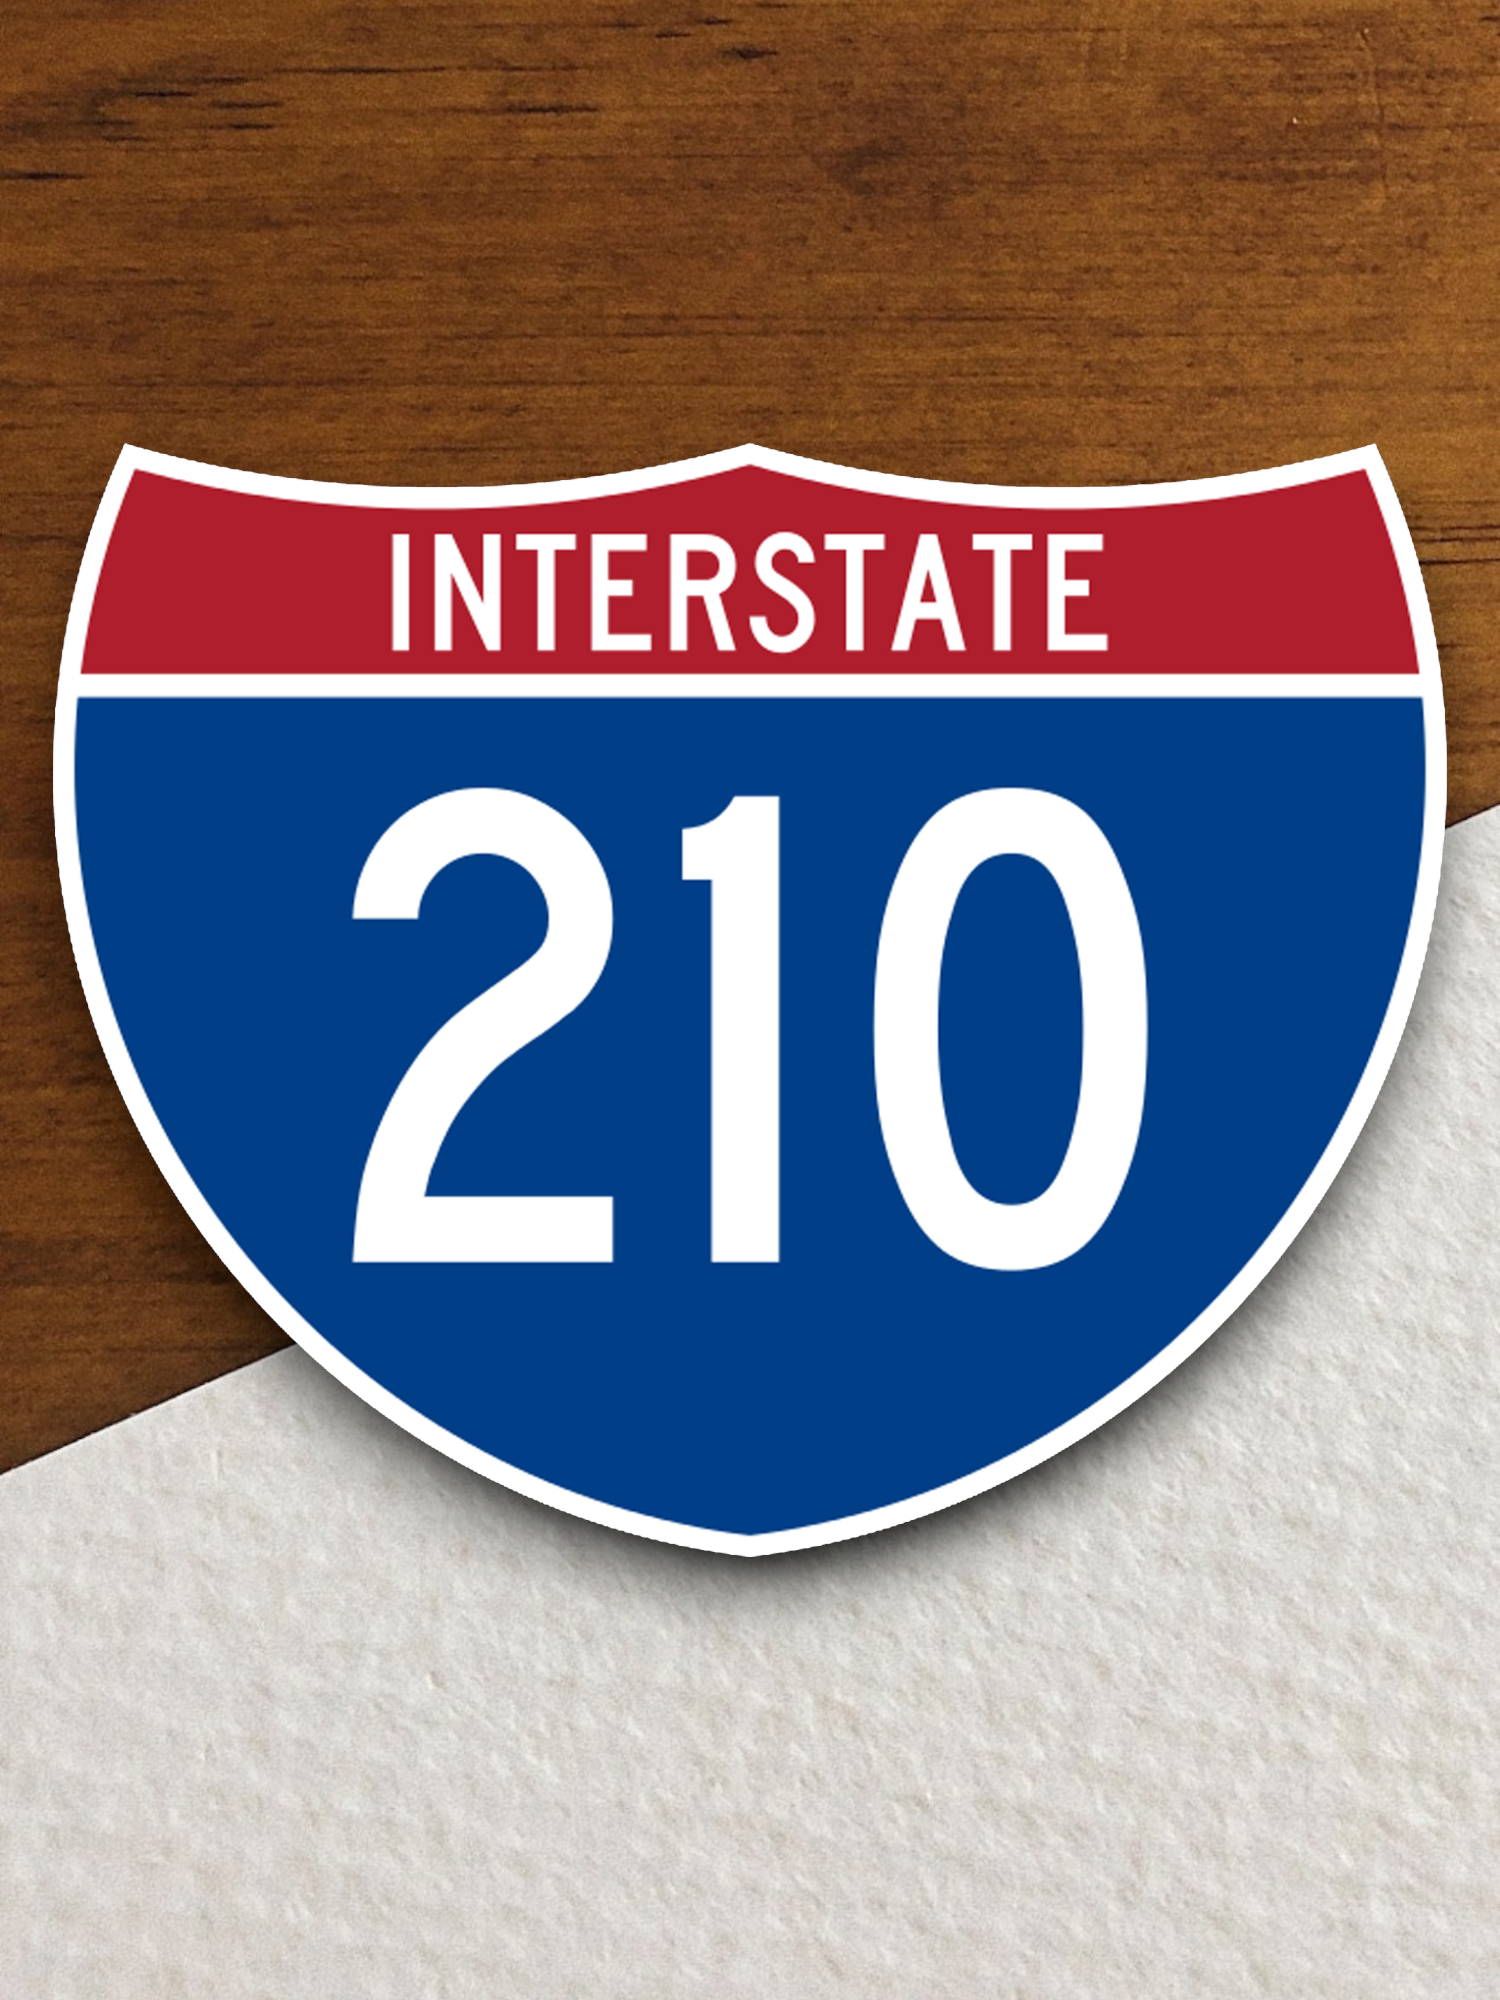 Interstate I-210 Road Sign Sticker